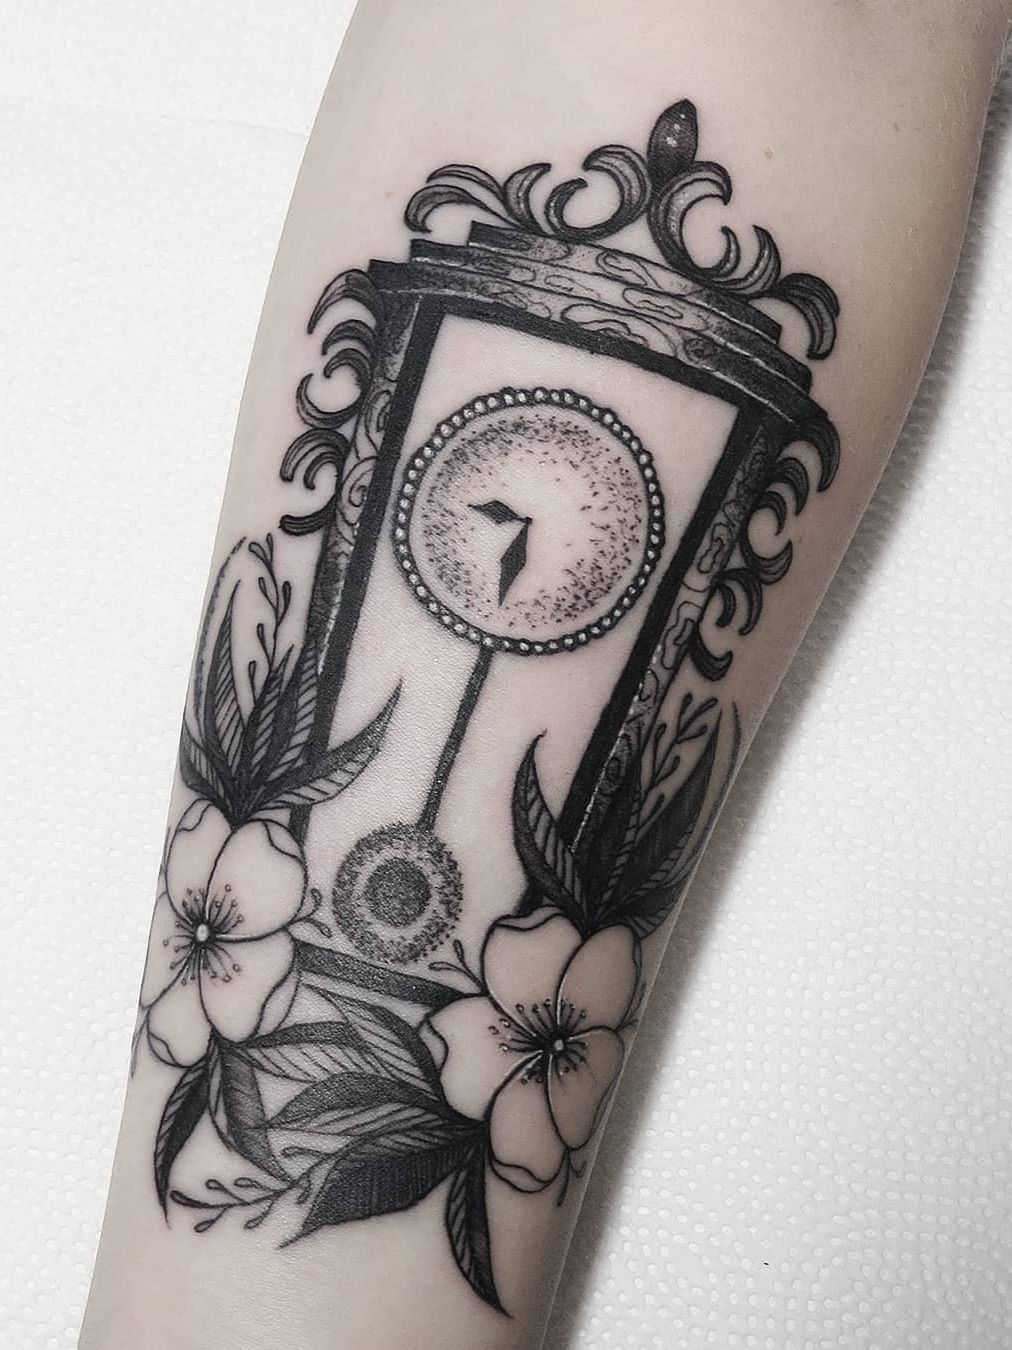 Teds Grandfather Clock Tattoo